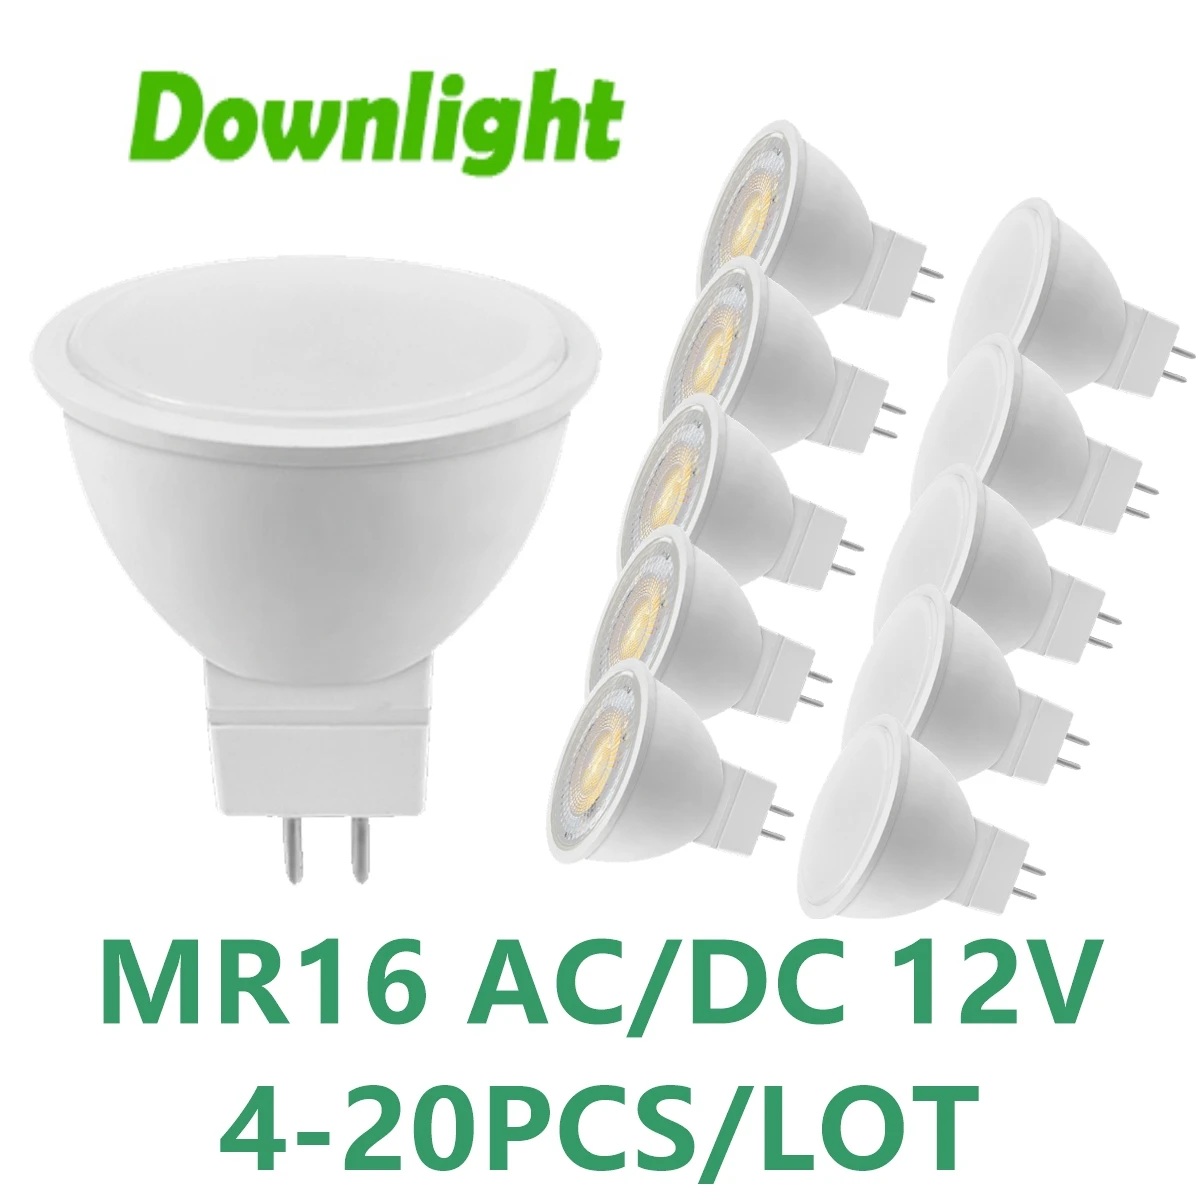 4-20PCS GU5.3 AC/DC 12V LED Spotlight Bulb MR16 Low Pressure 3W 5W 6W 7W  Light 120 Degrees 38 Degrees Study Kitchen For Home